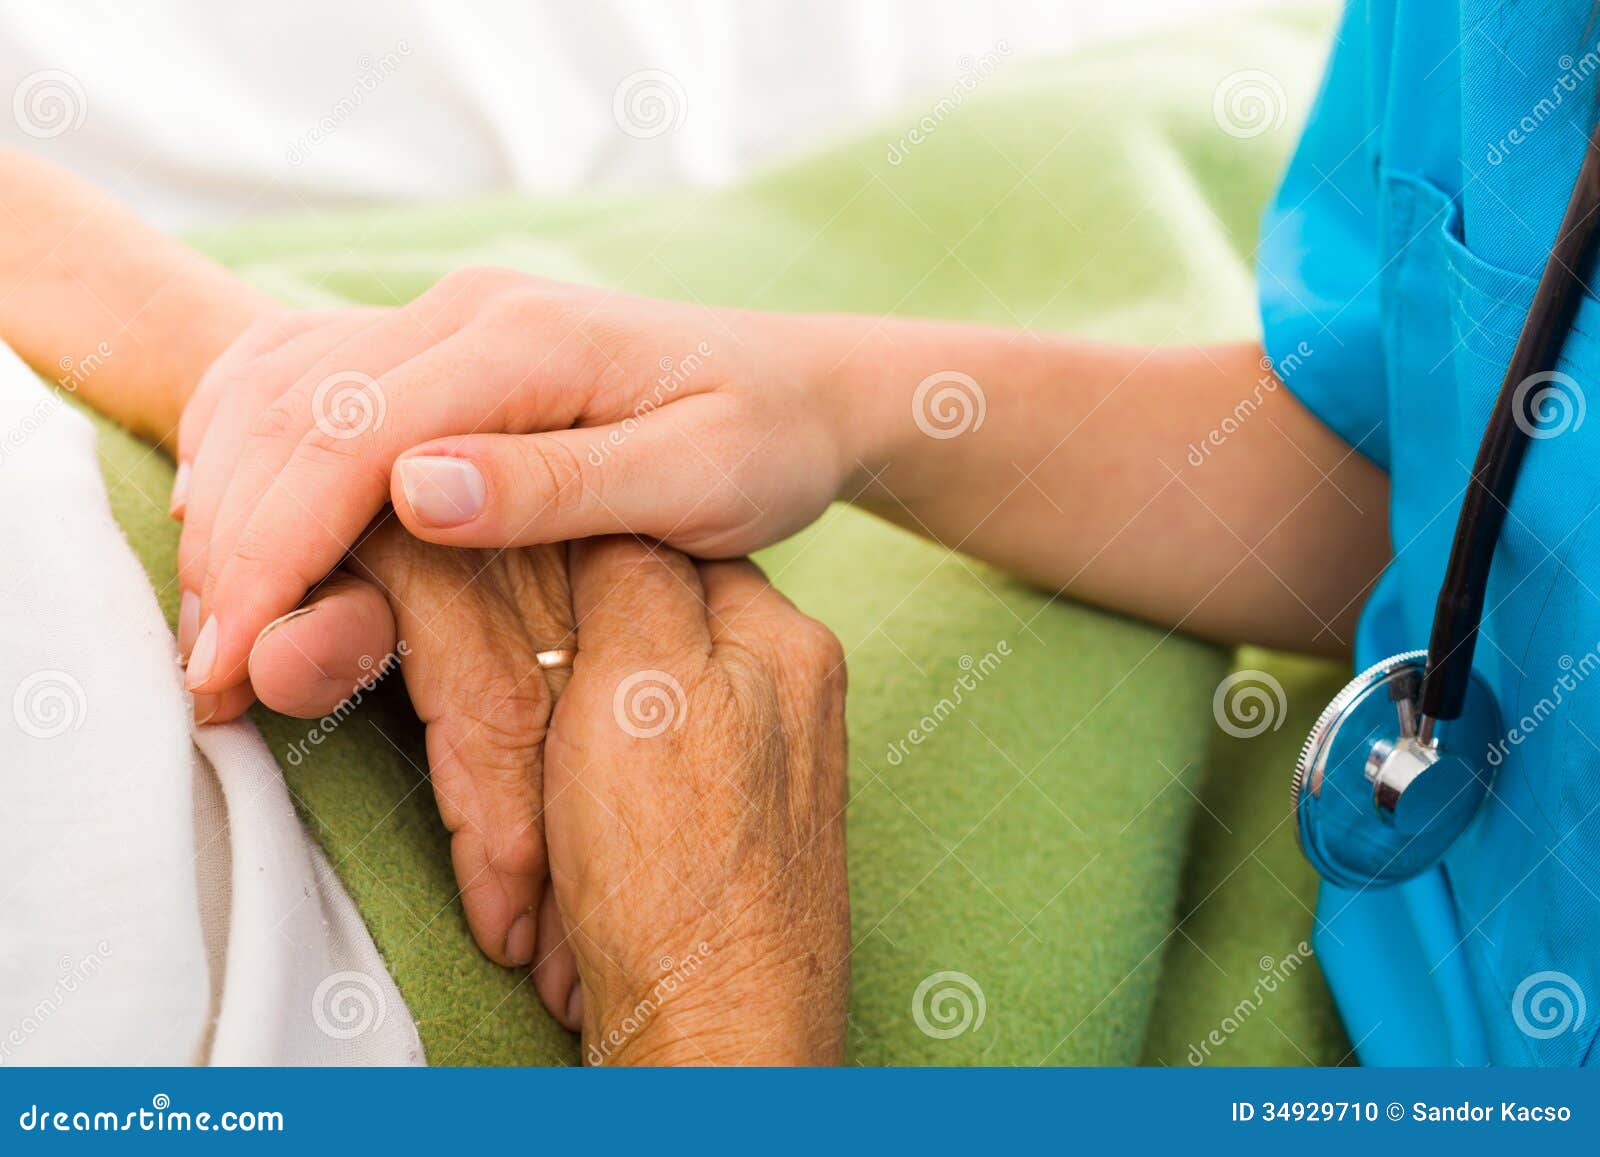 nurses helping elderly